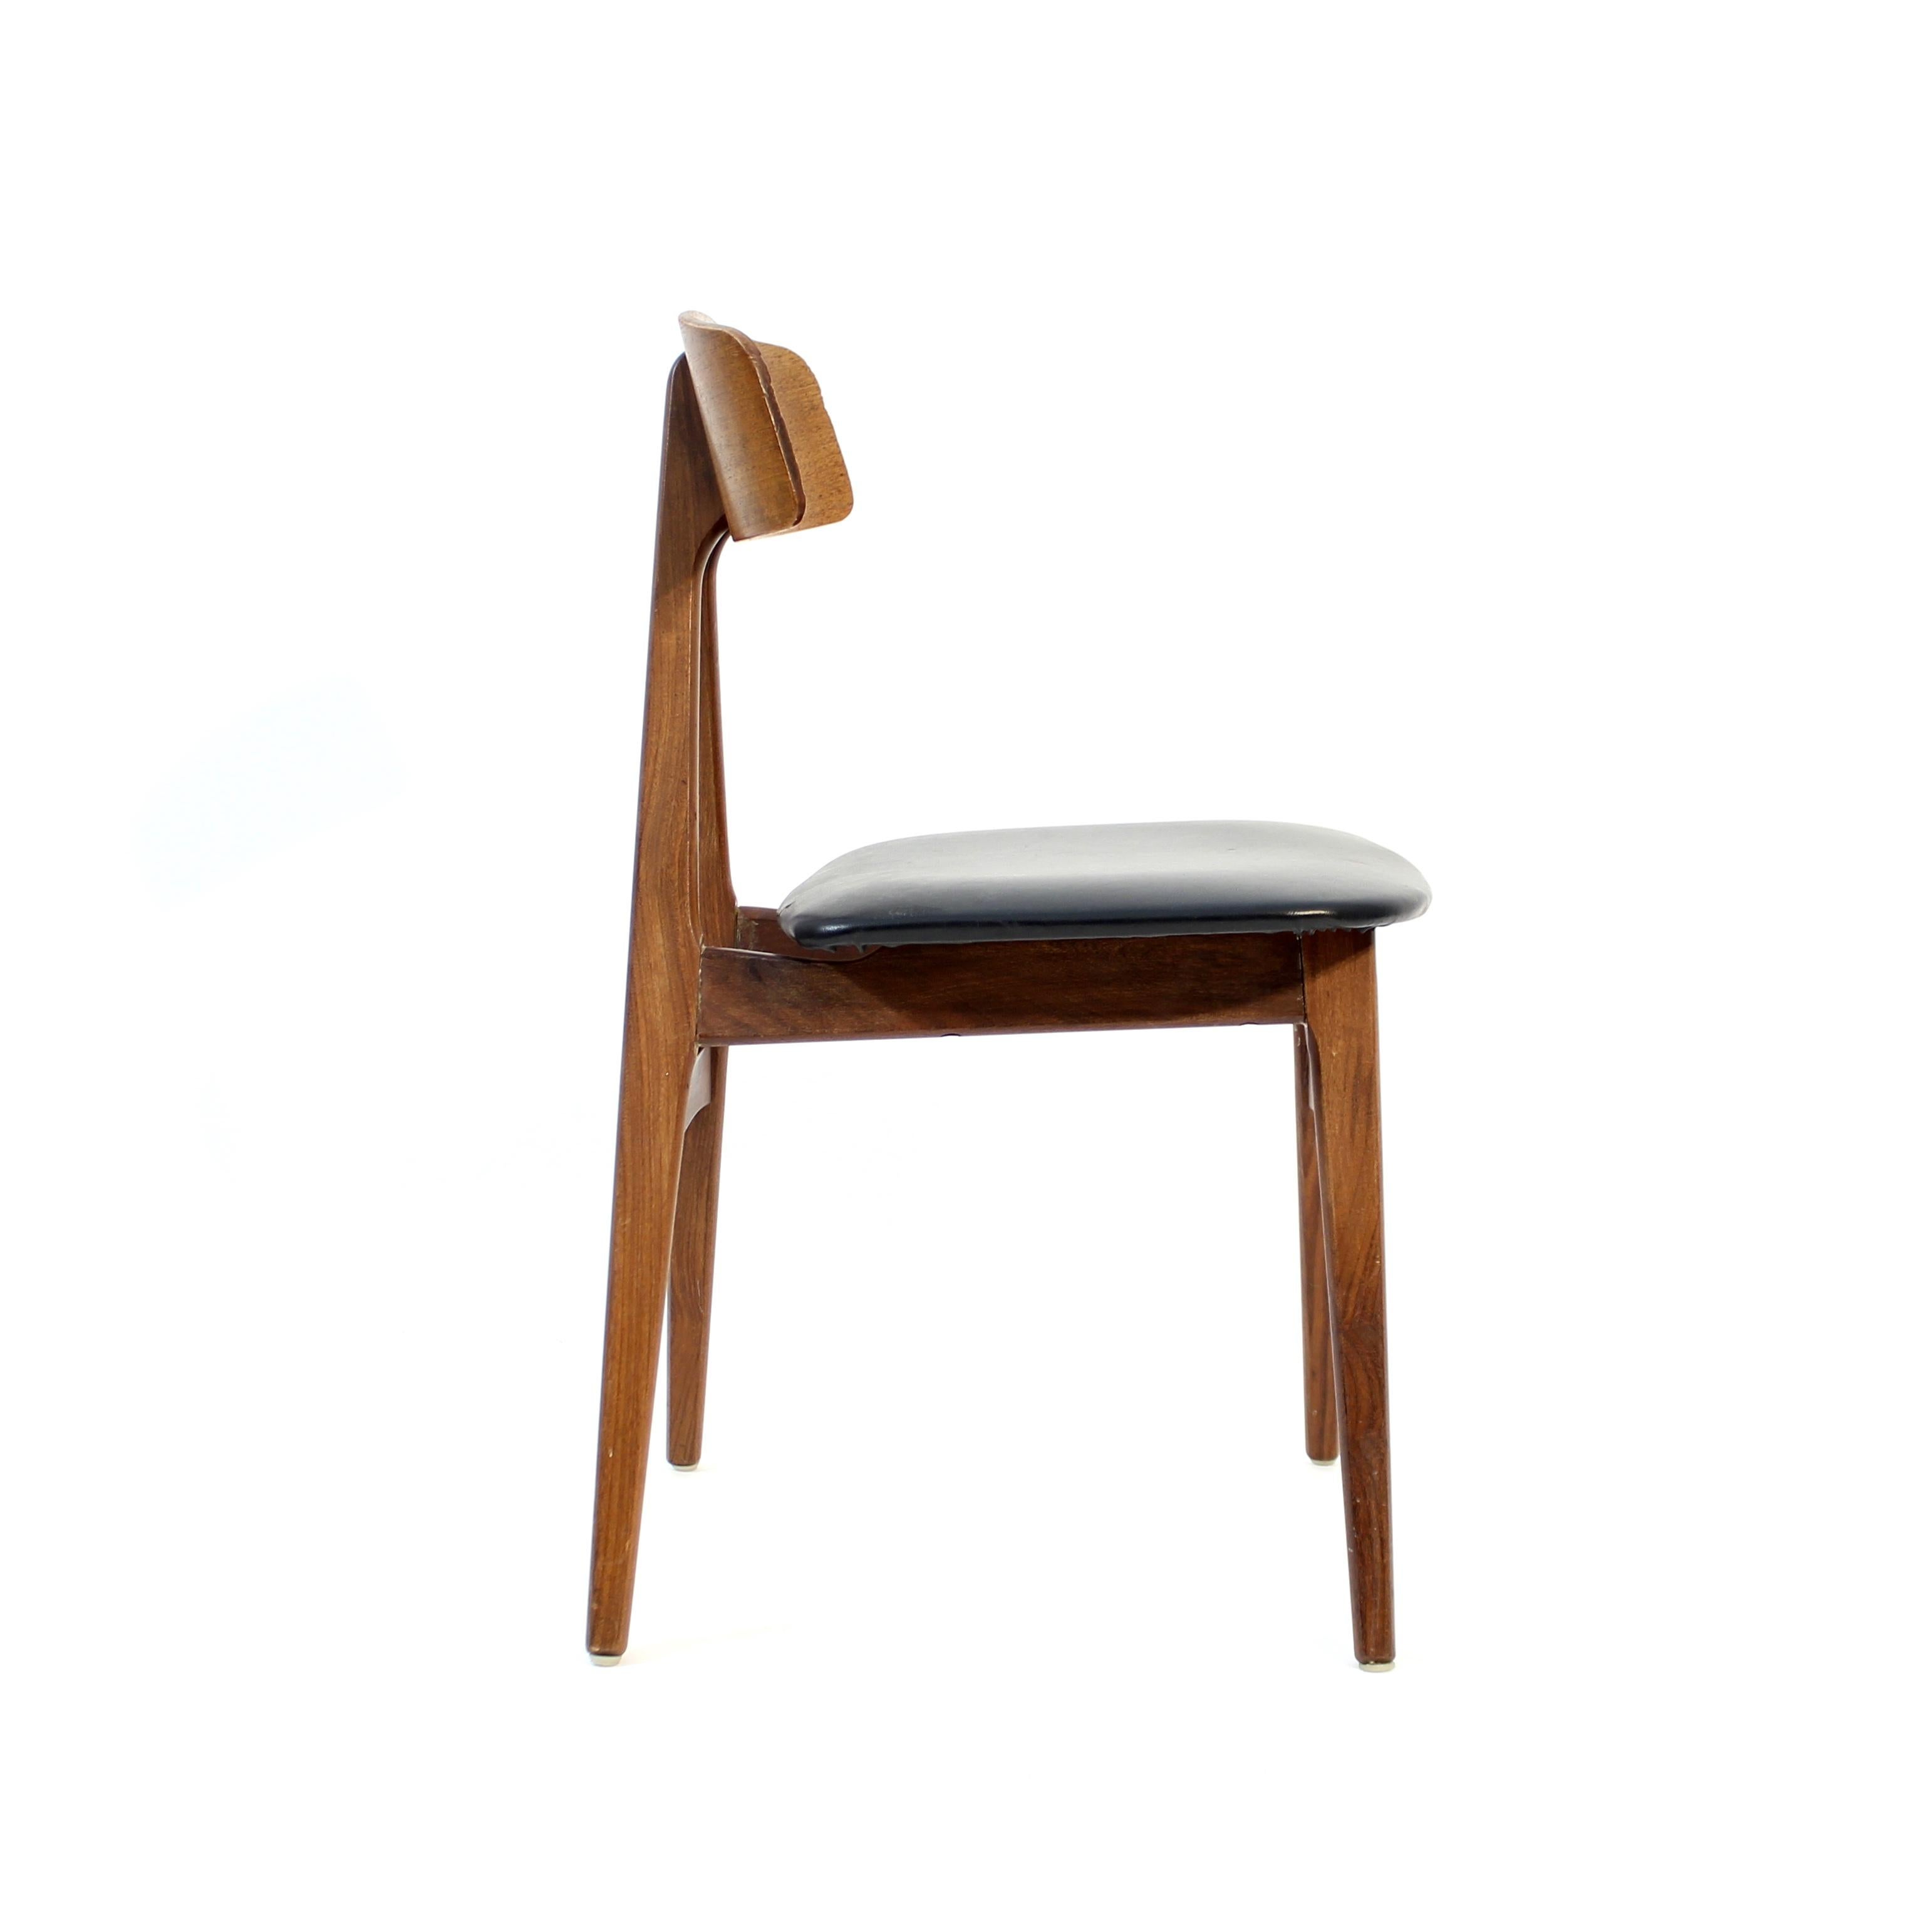 20th Century Bengt Ruda, Nizza teak chair for IKEA, 1959 For Sale